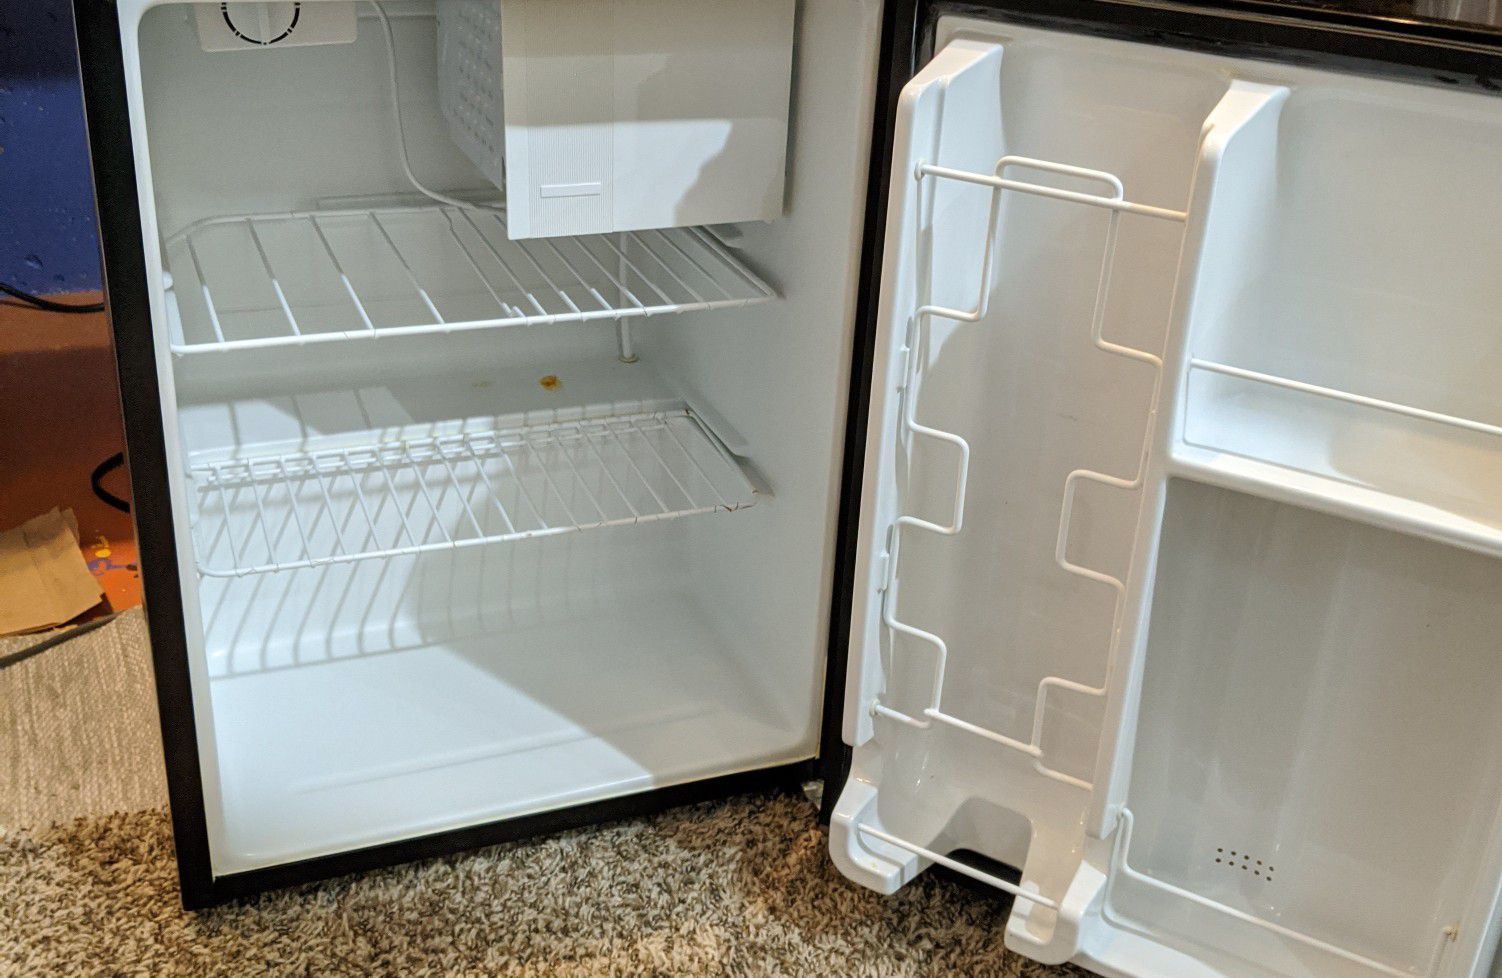 Mini small refrigerator, dorm size refrigerator. Barely Used good condition